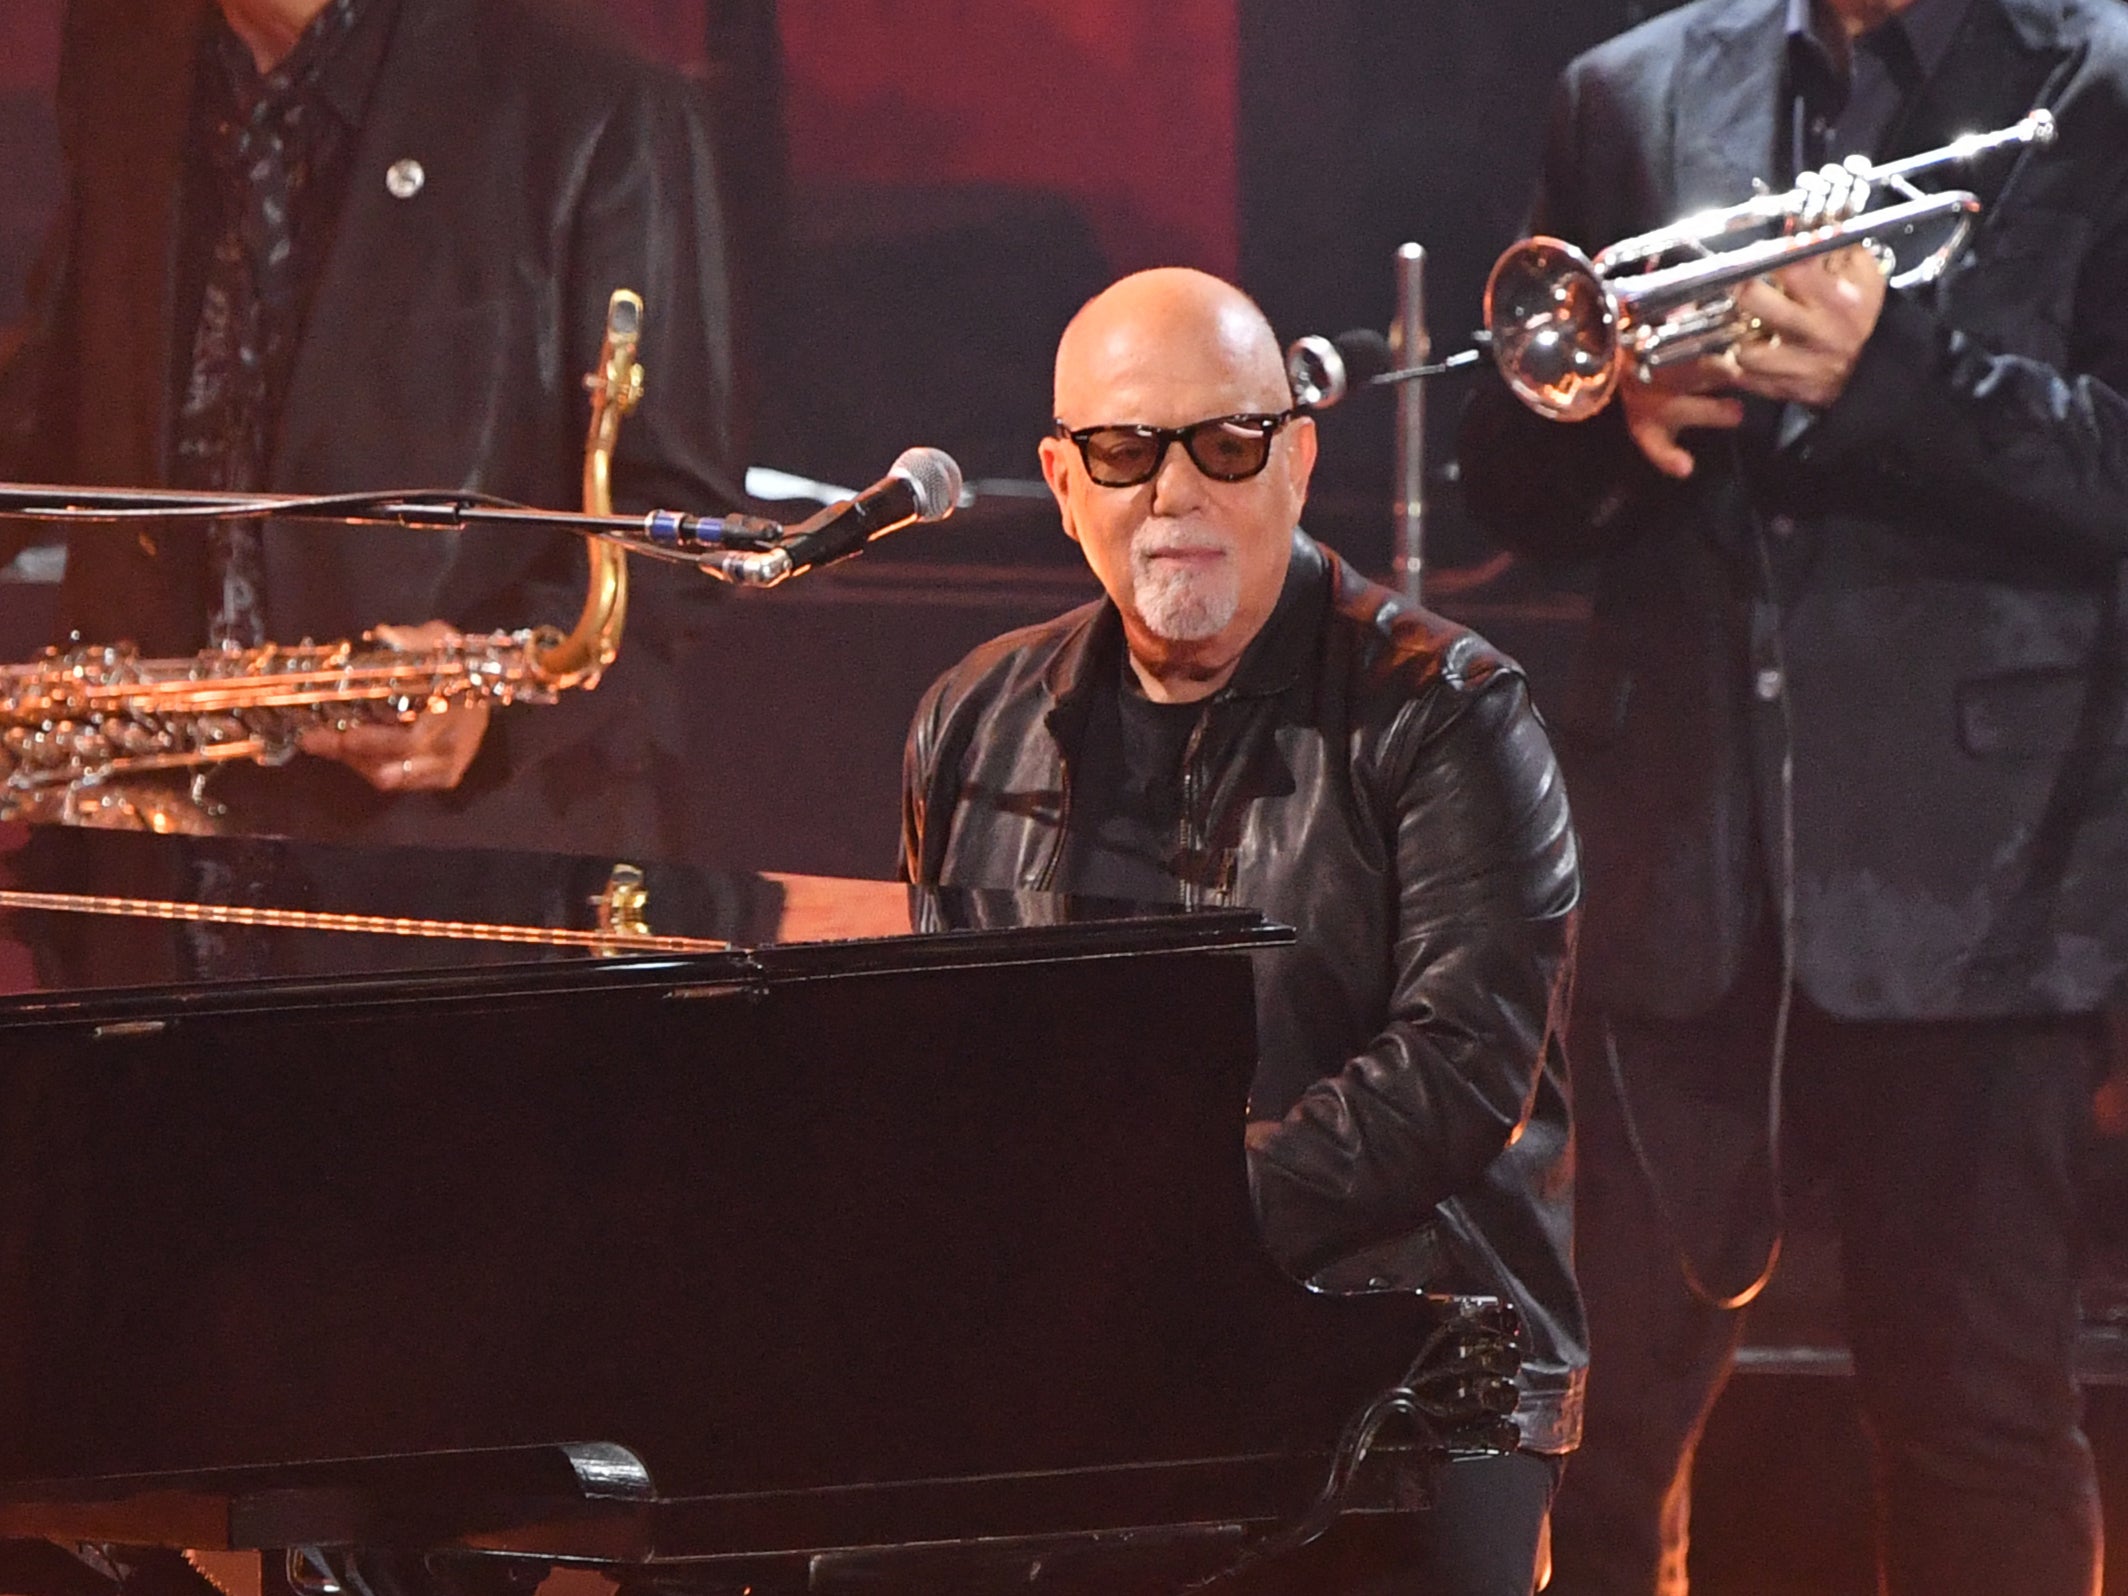 Billy Joel performing at the Grammys